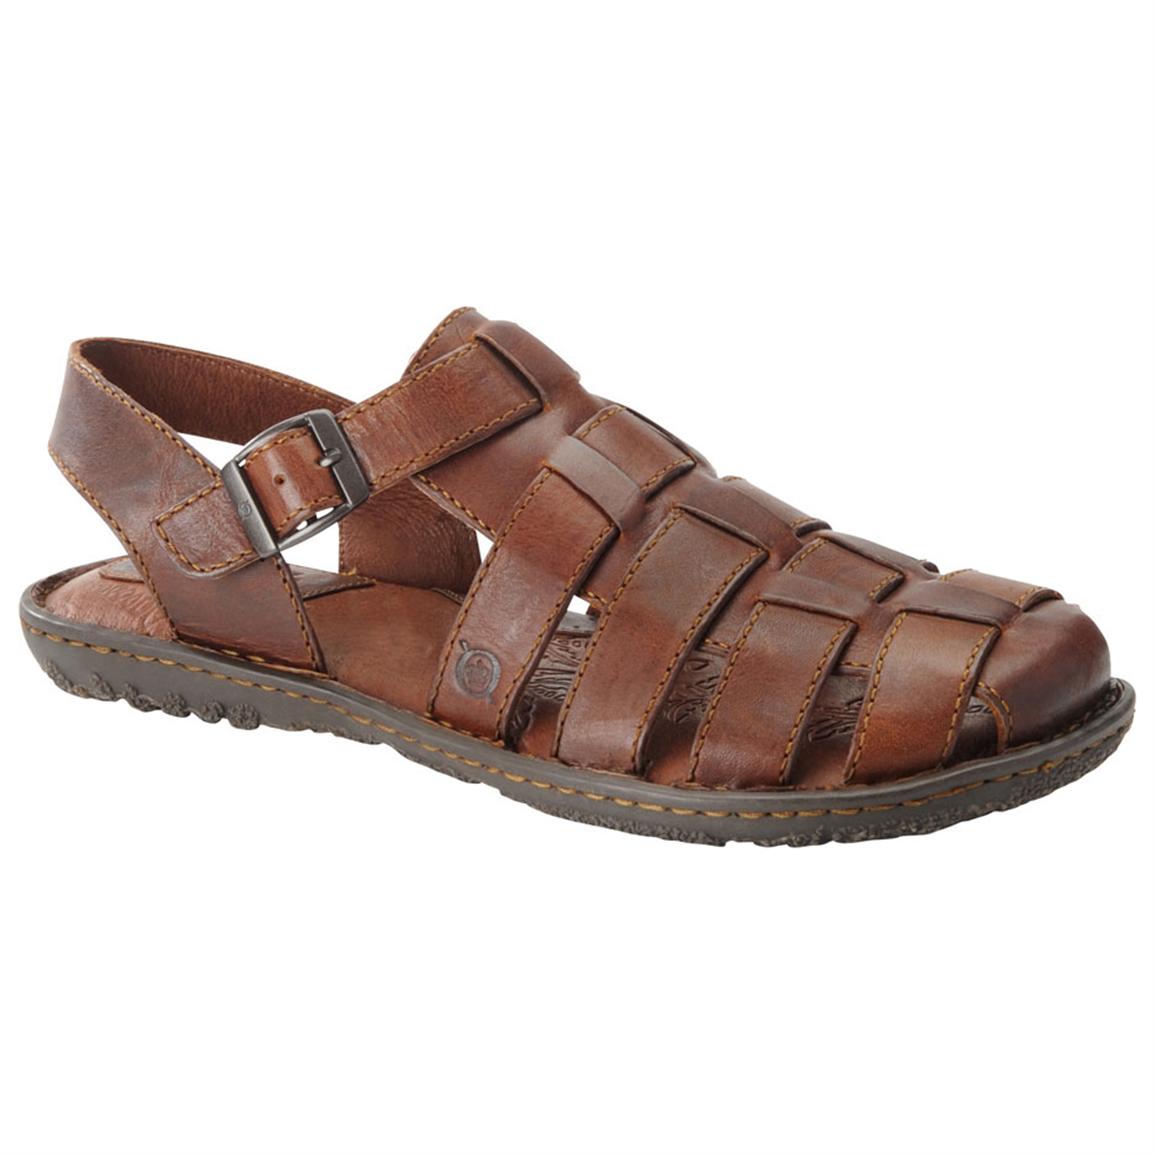 Men's Born® Lagos, Caramel - 184463, Sandals at Sportsman's Guide